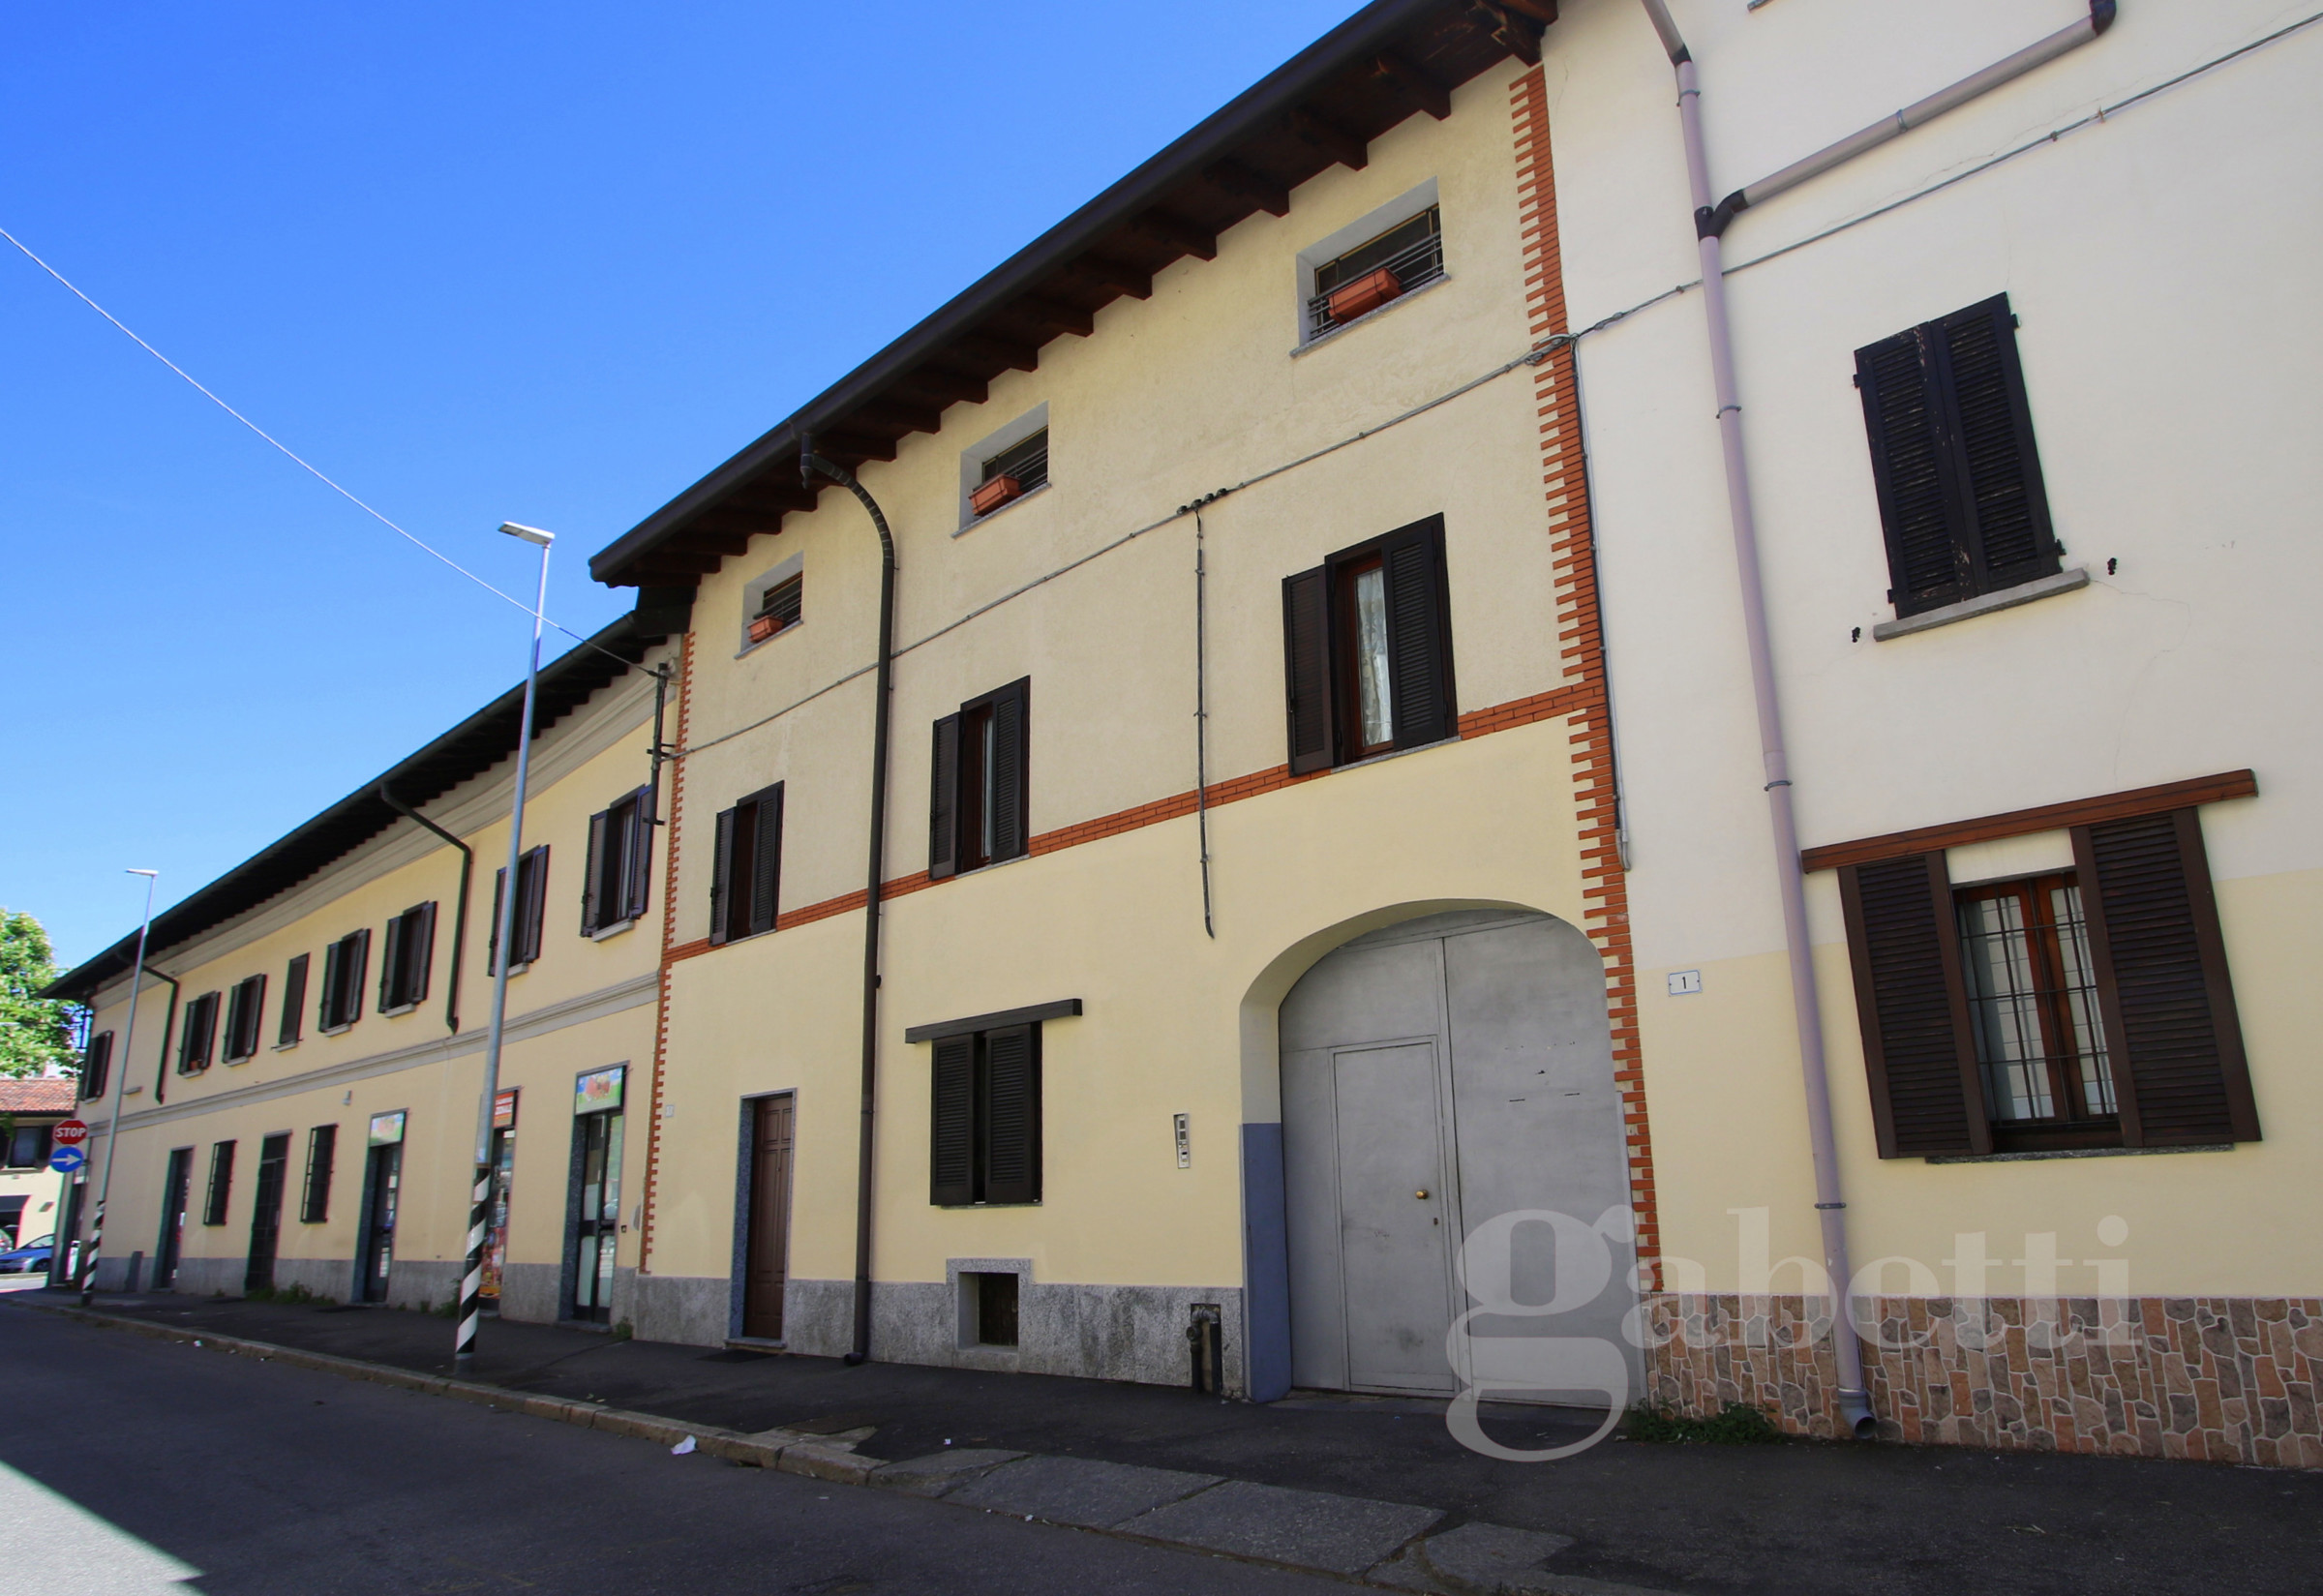 Vendita Bilocale Appartamento Busto Arsizio Via Confalonieri, 1 487320